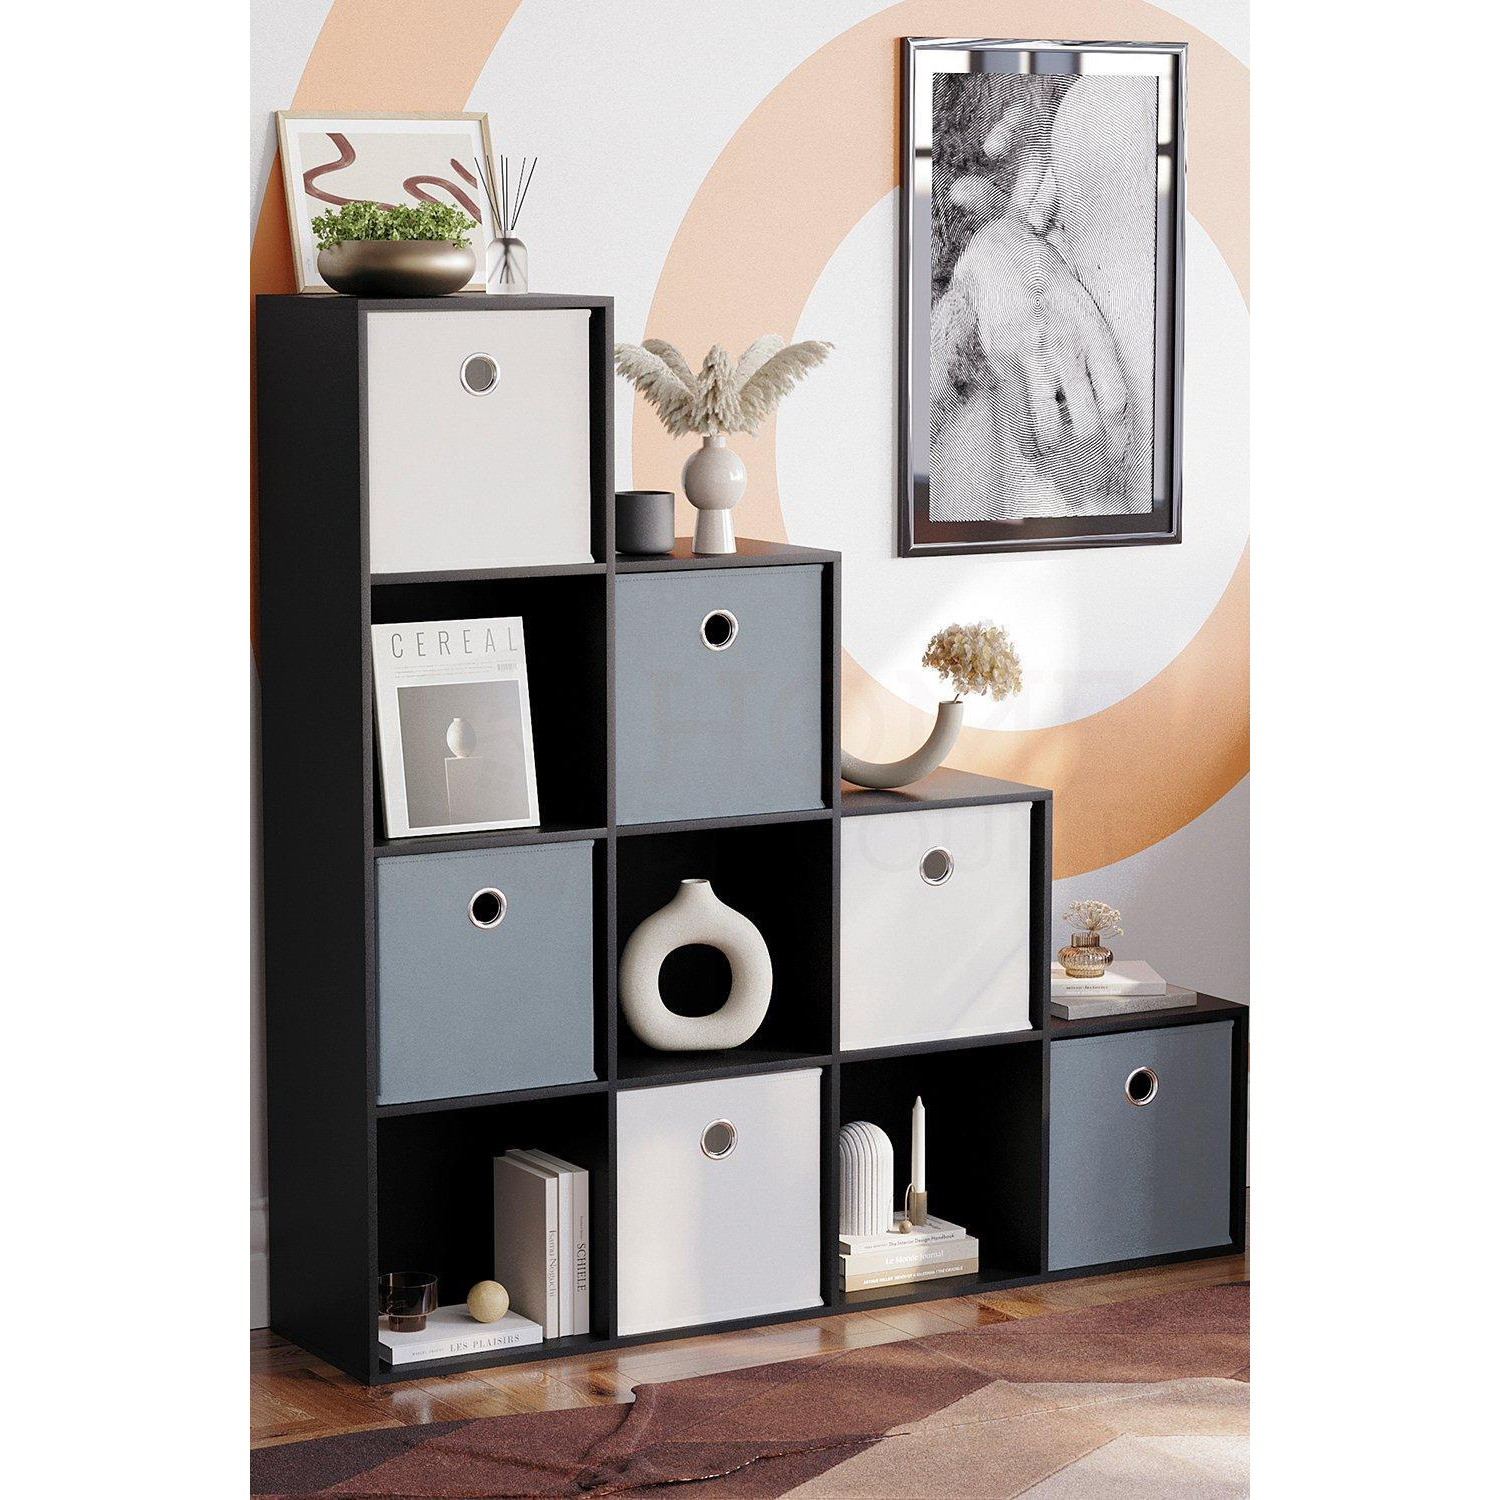 Vida Designs Durham 10 Cube Staircase Bookcase Storage Unit 1280 x 1280 x 290 mm - image 1